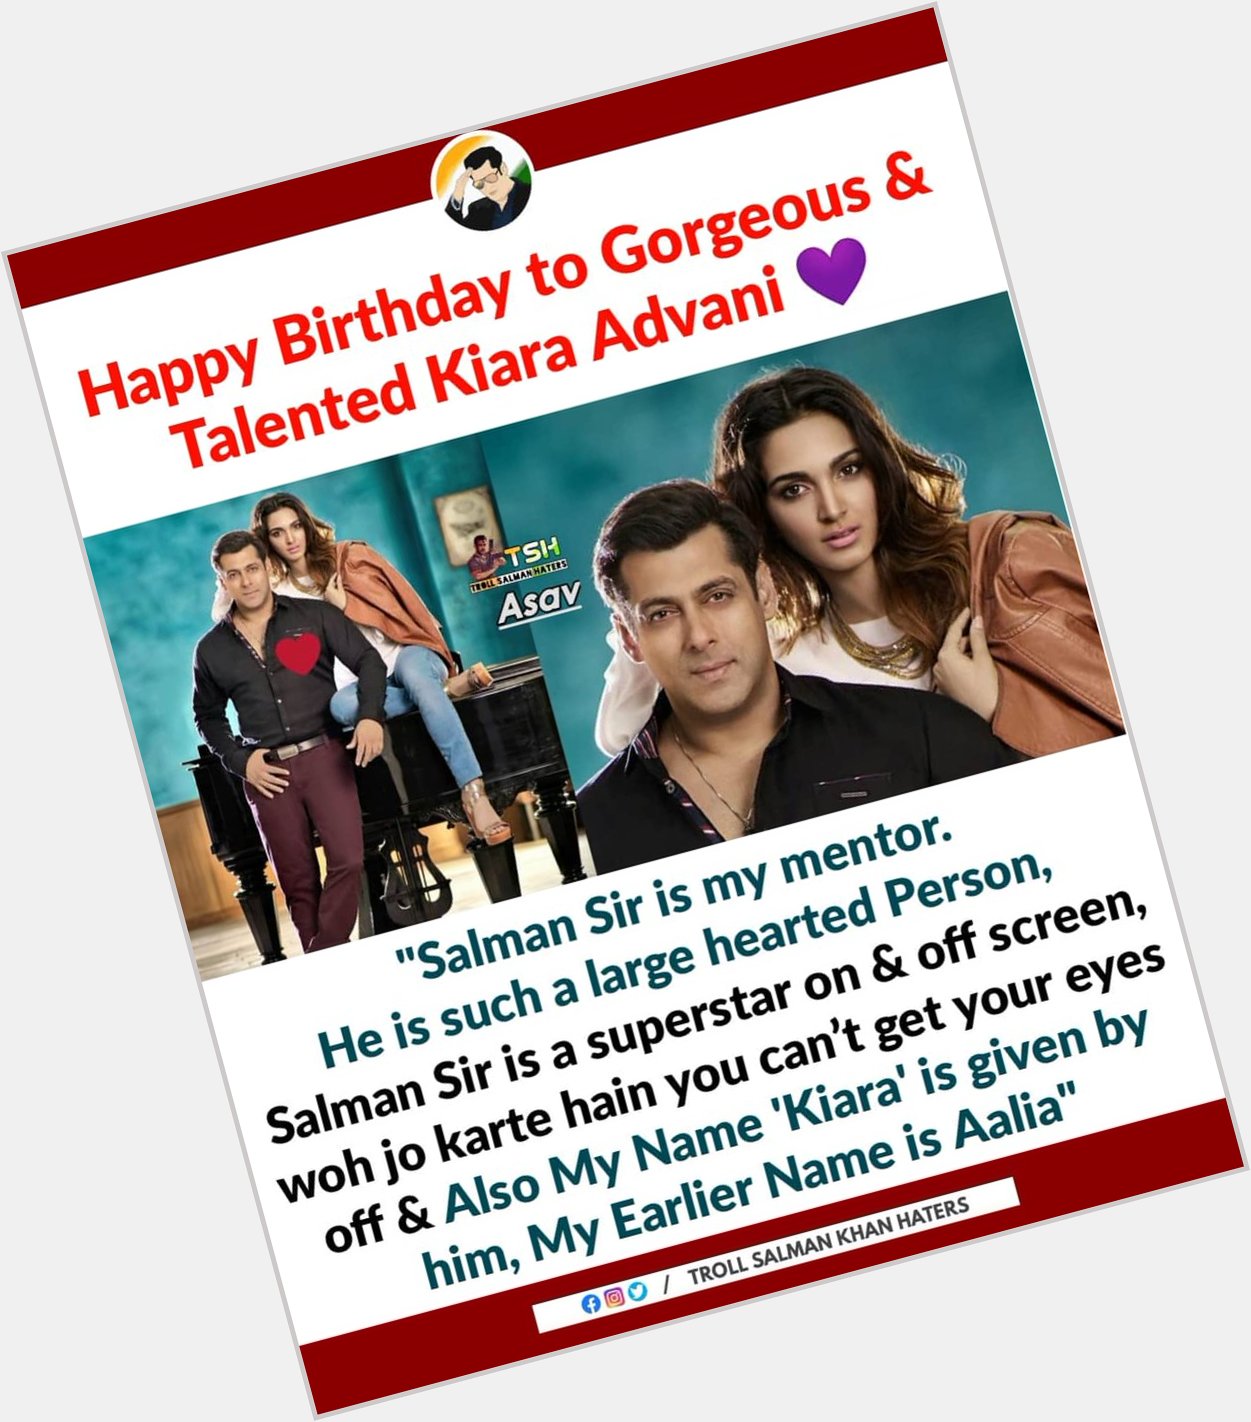 Happy Birthday Kiara Advani   Wishing you great Success Ahead, Keep doing good Movies  